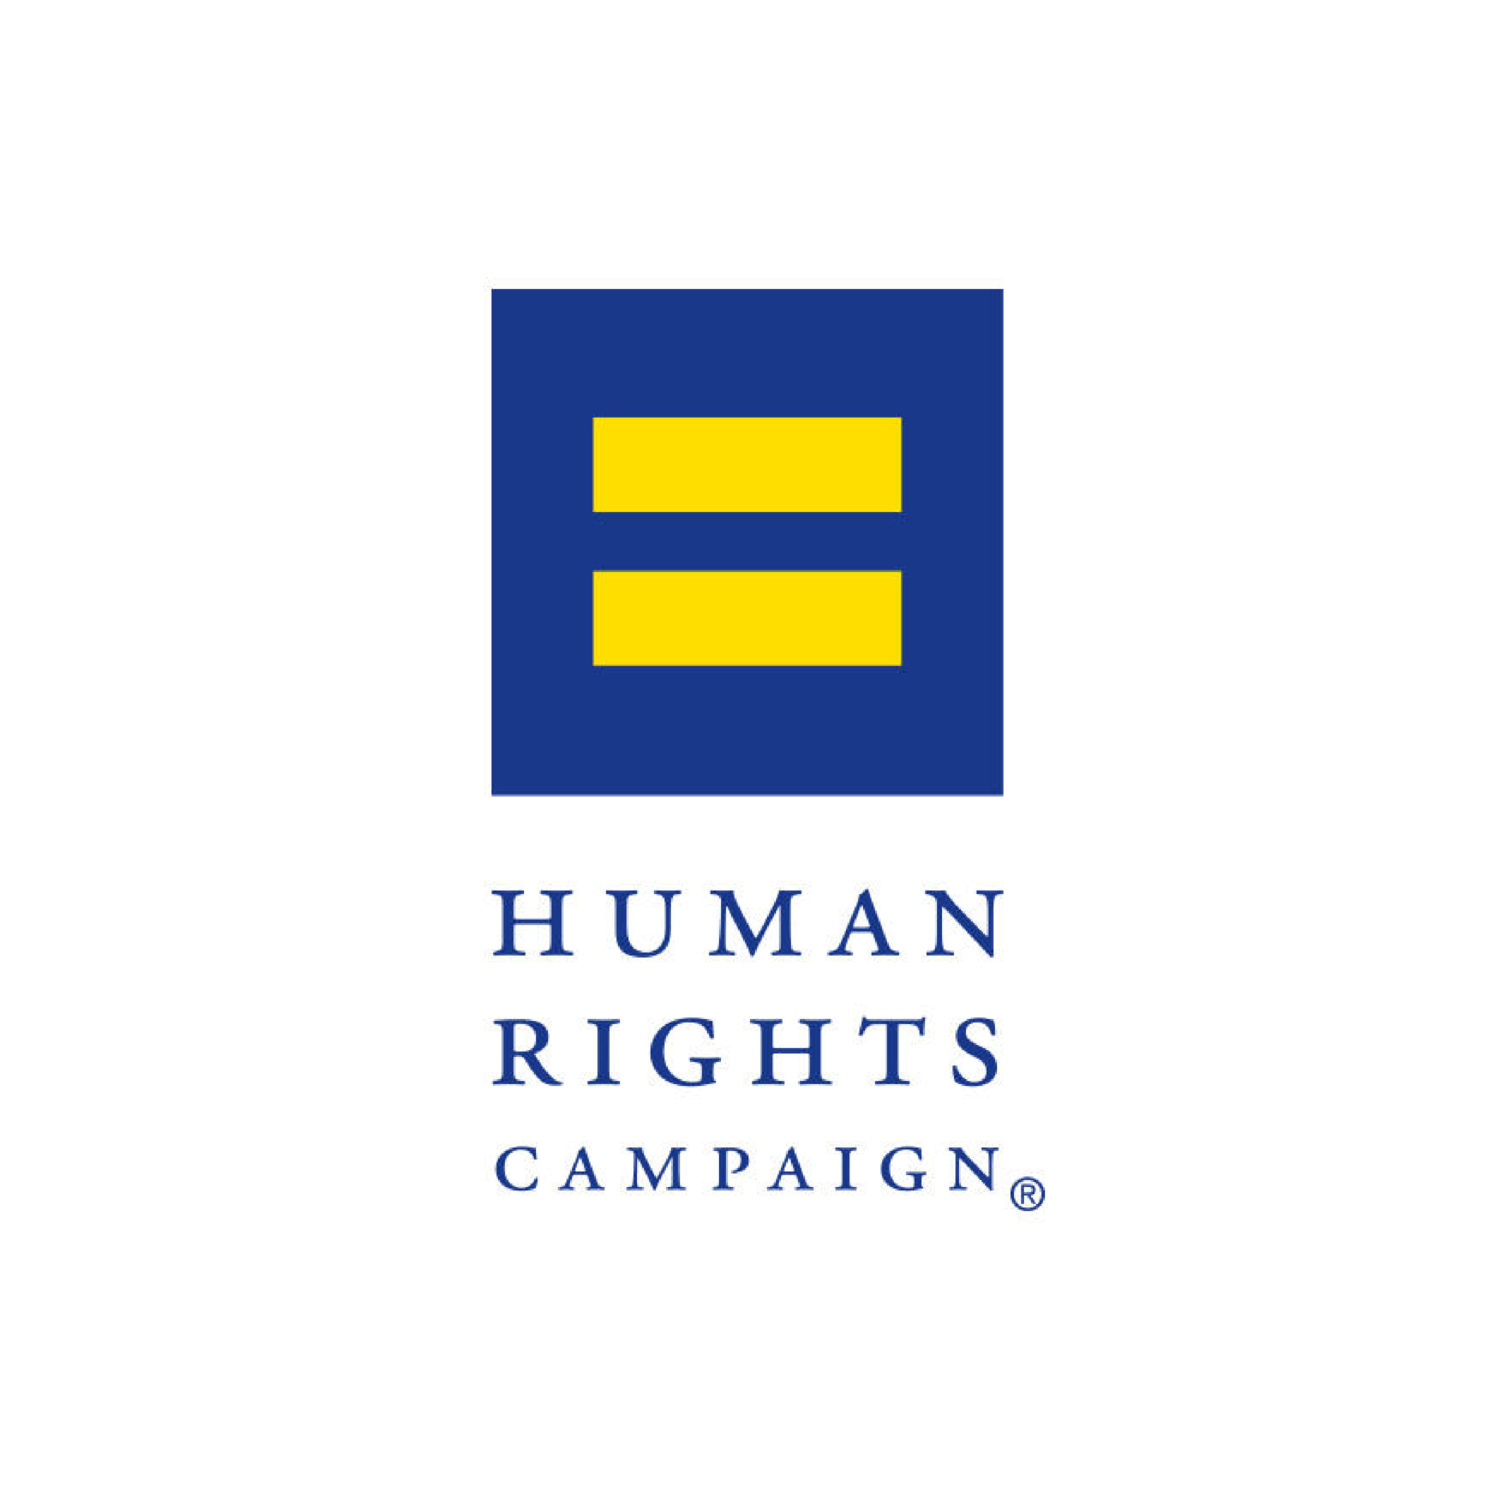 Human Rights Campaign - LGBTQ organization in Washington DC